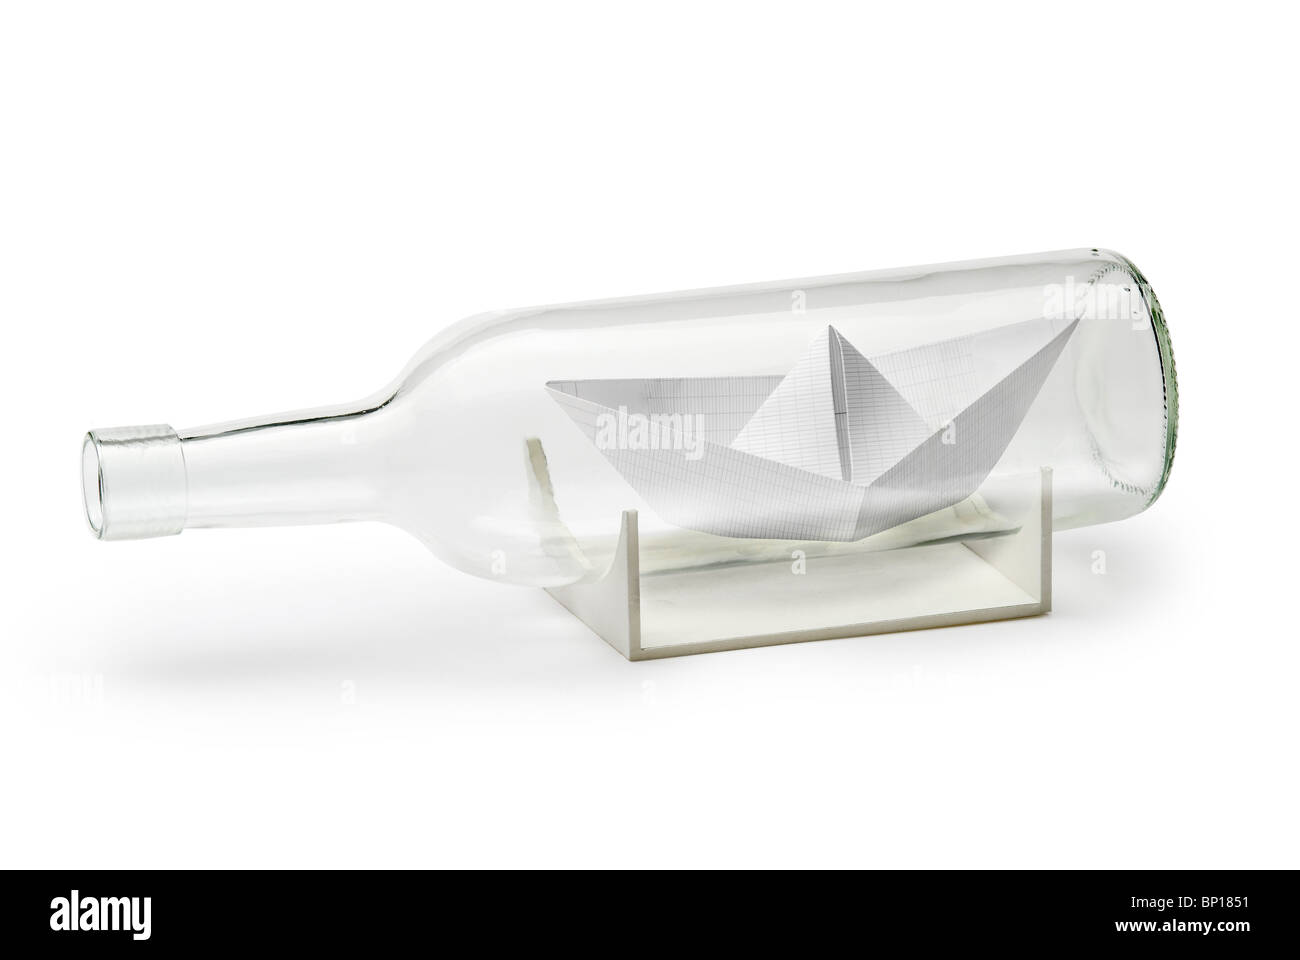 Paper boat in a bottle Stock Photo